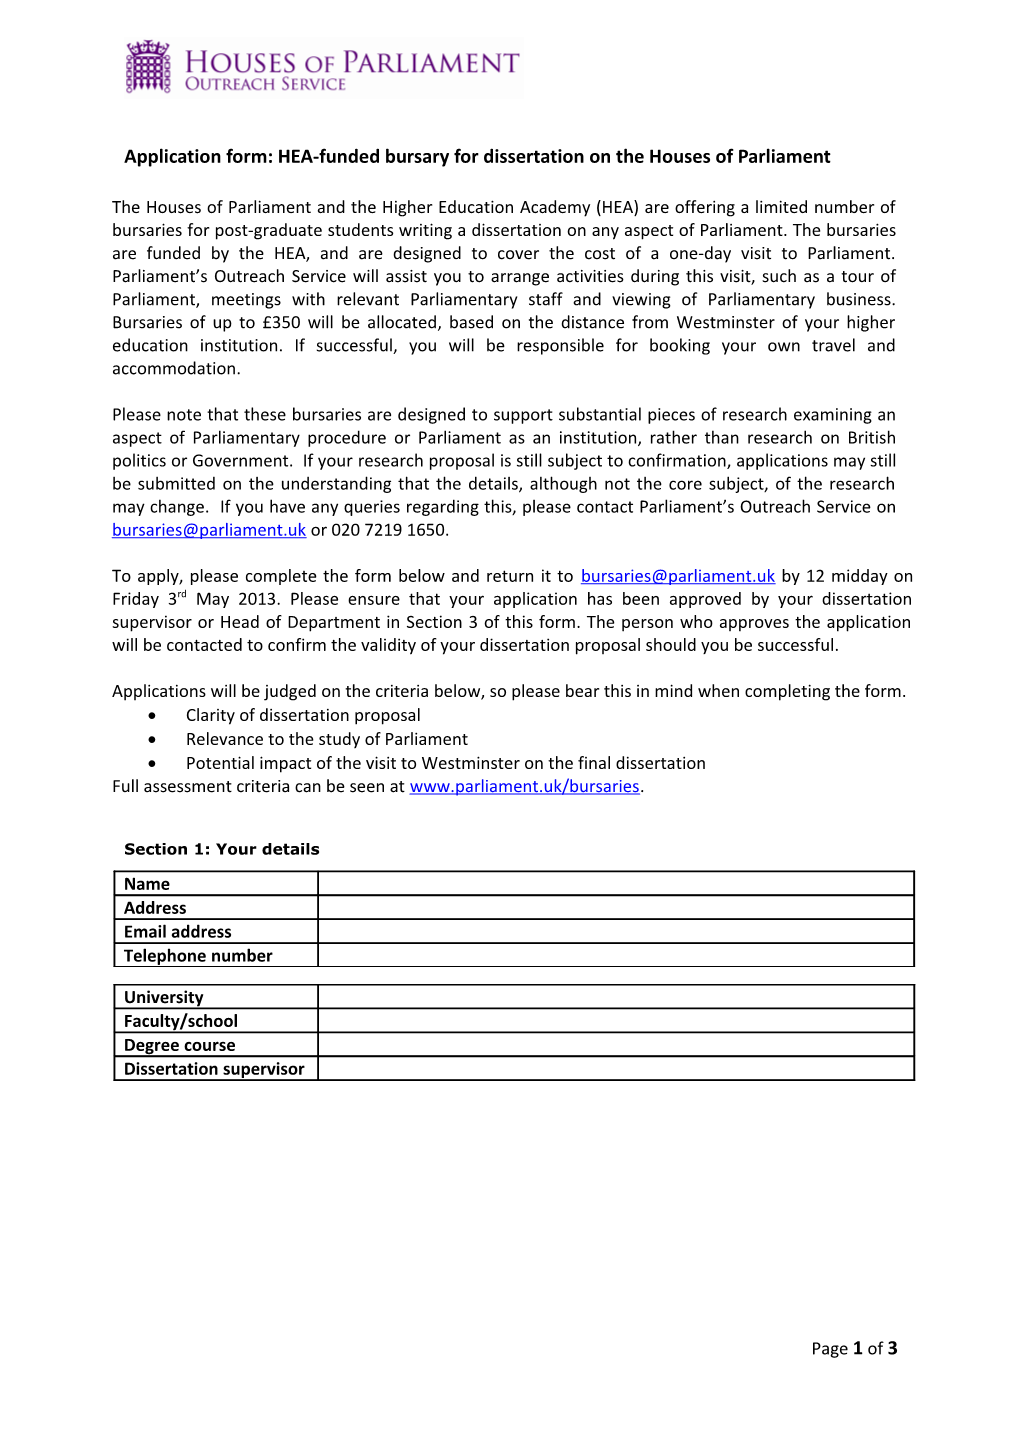 Application Form: HEA Funded Bursary for Parliament Dissertation